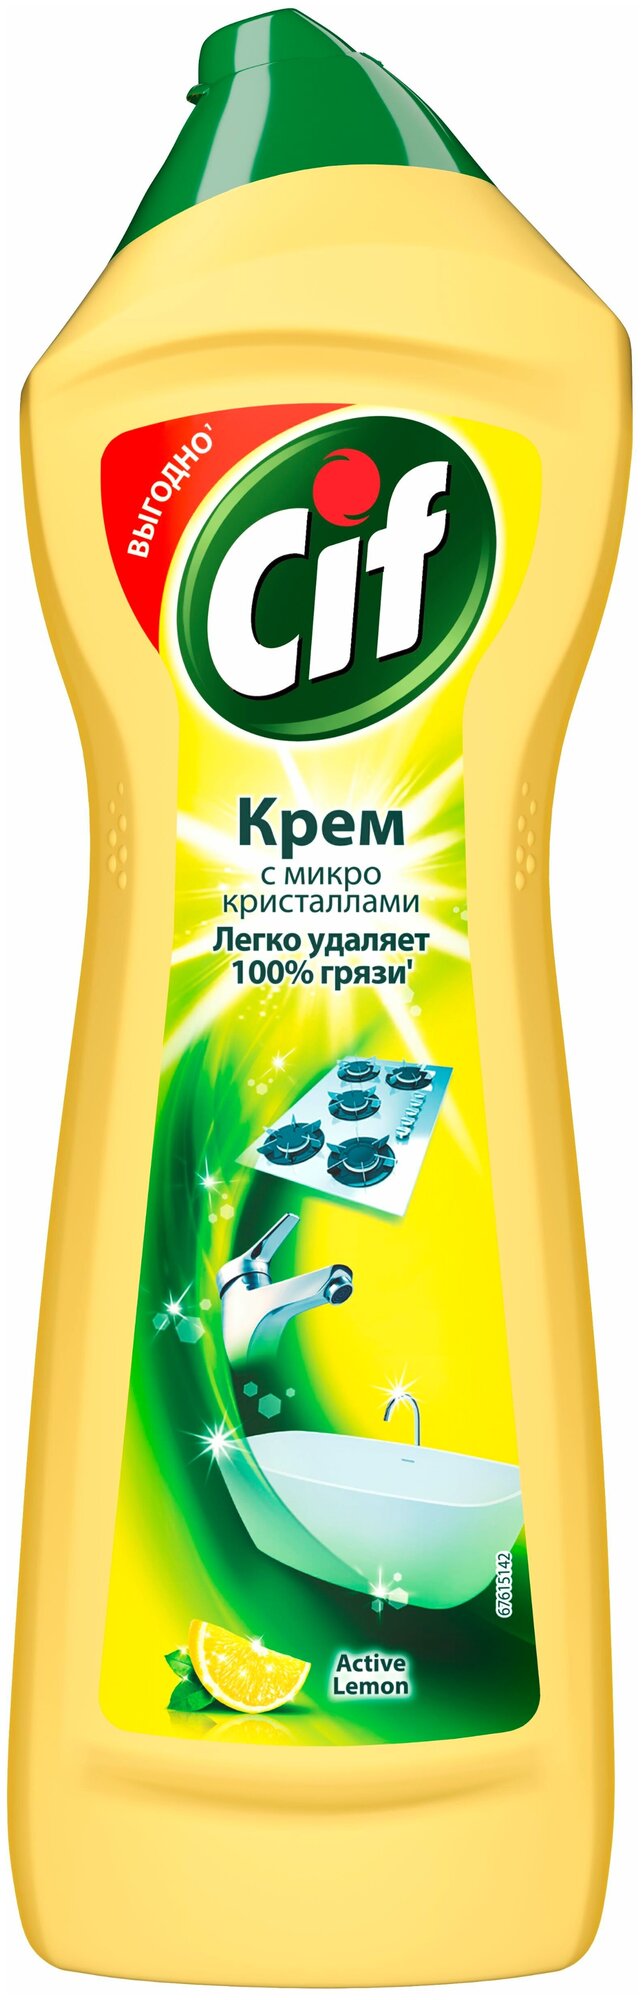 Cif крем Active Lemon, 0.75 л